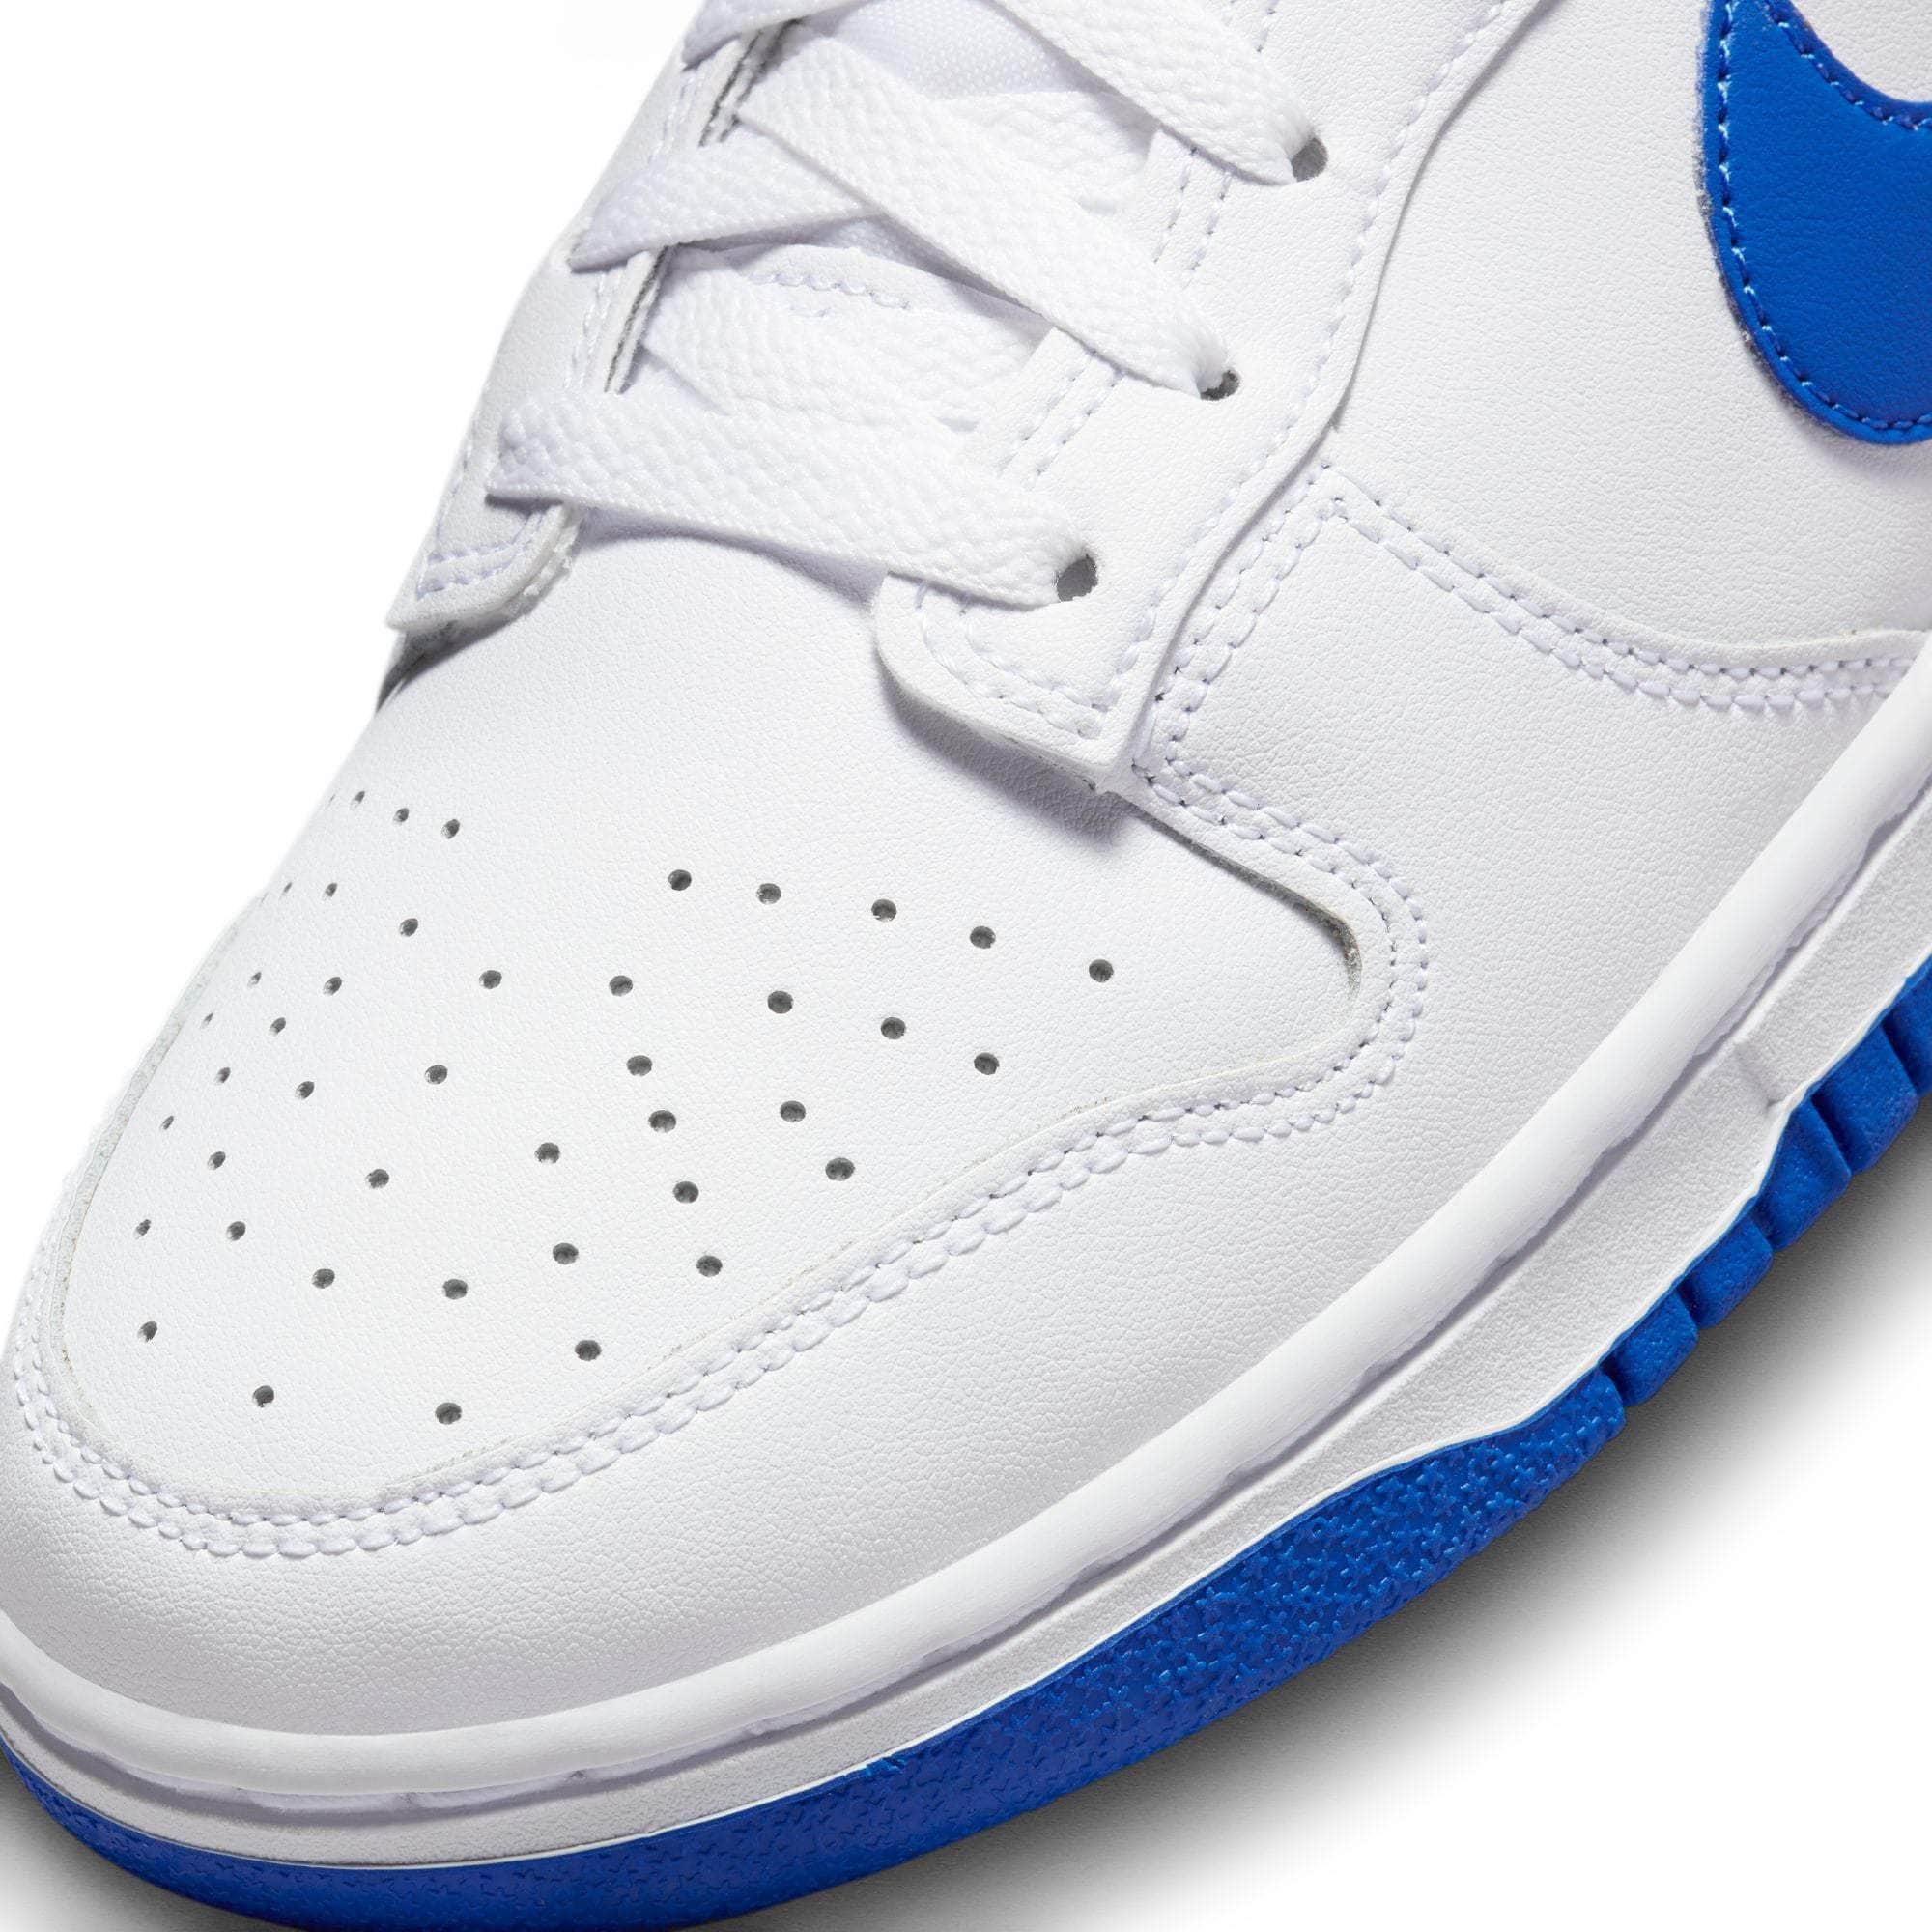 NIKE FOOTWEAR Nike Dunk Low "White Hyper Royal" - Men's